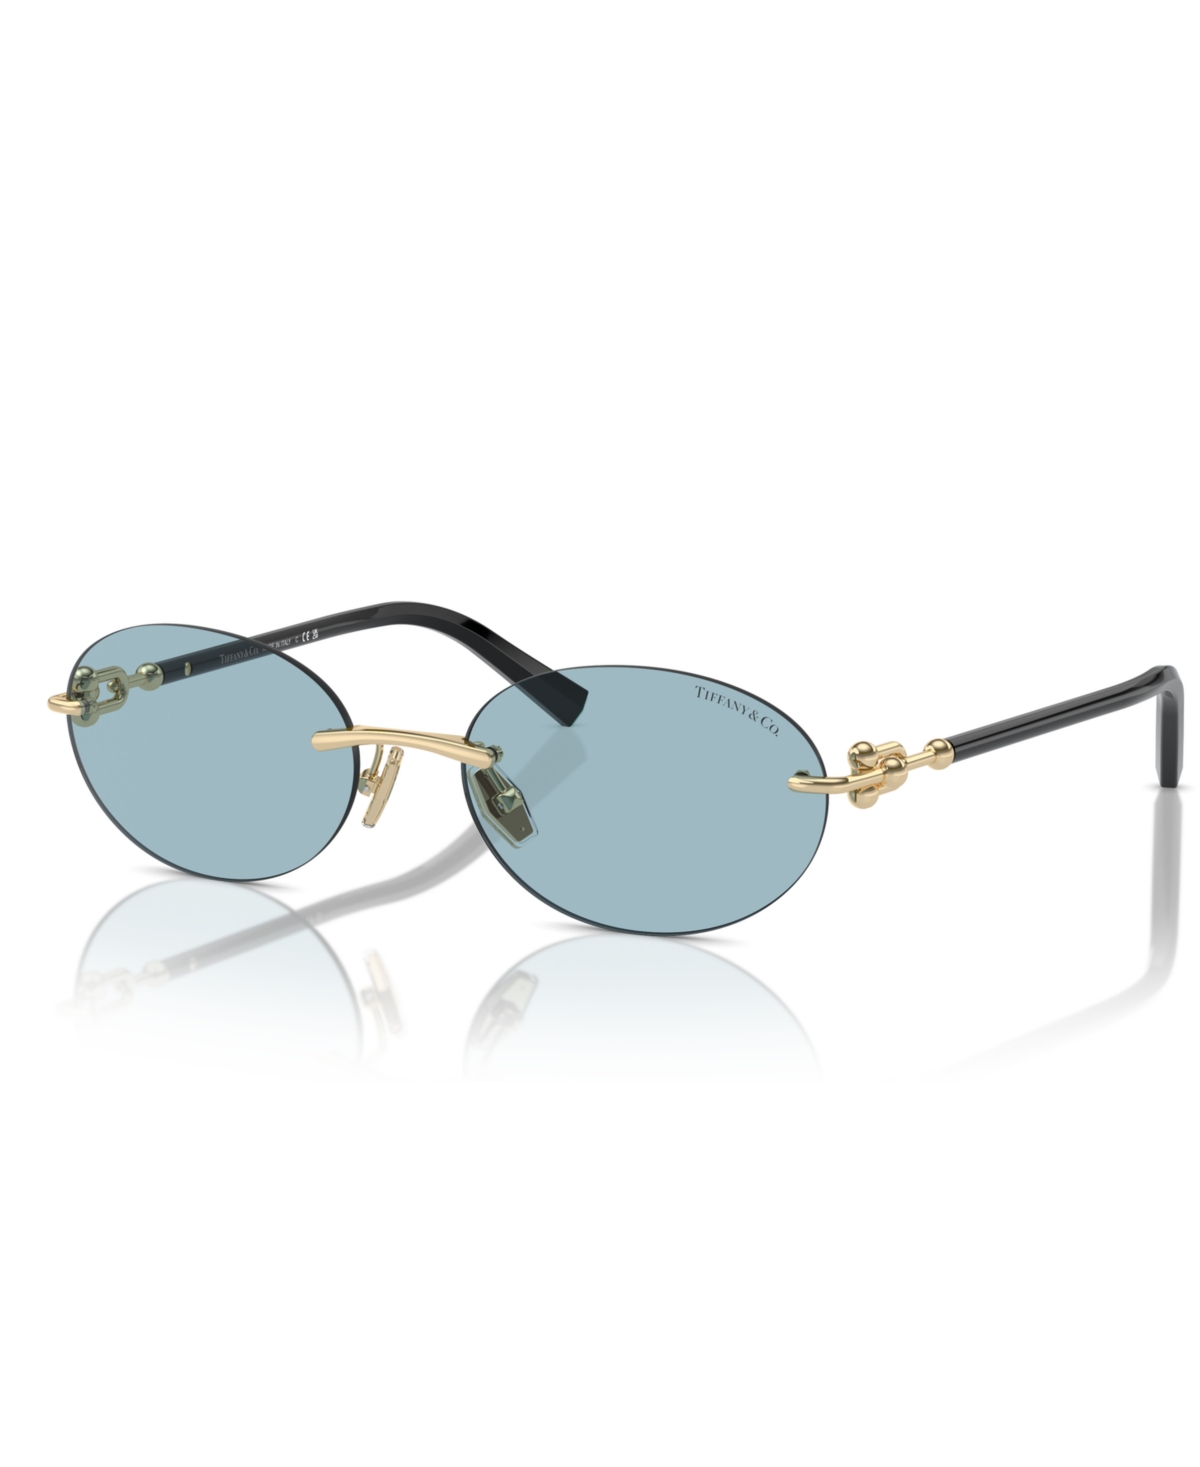 Women's Sunglasses, Tf3104D - Pale Gold, Gray